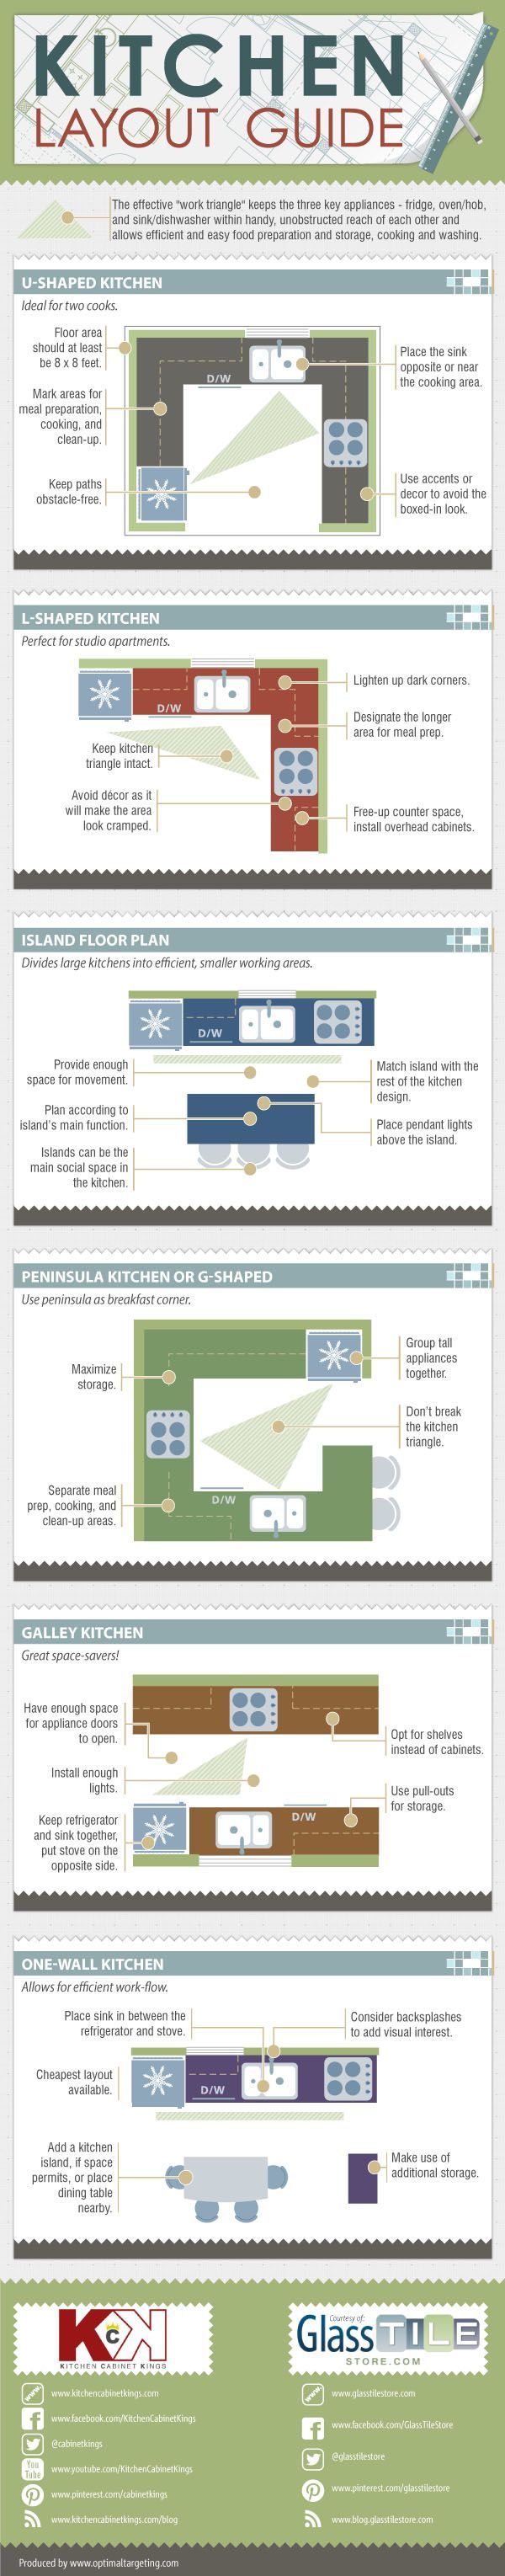 Kitchen layouts